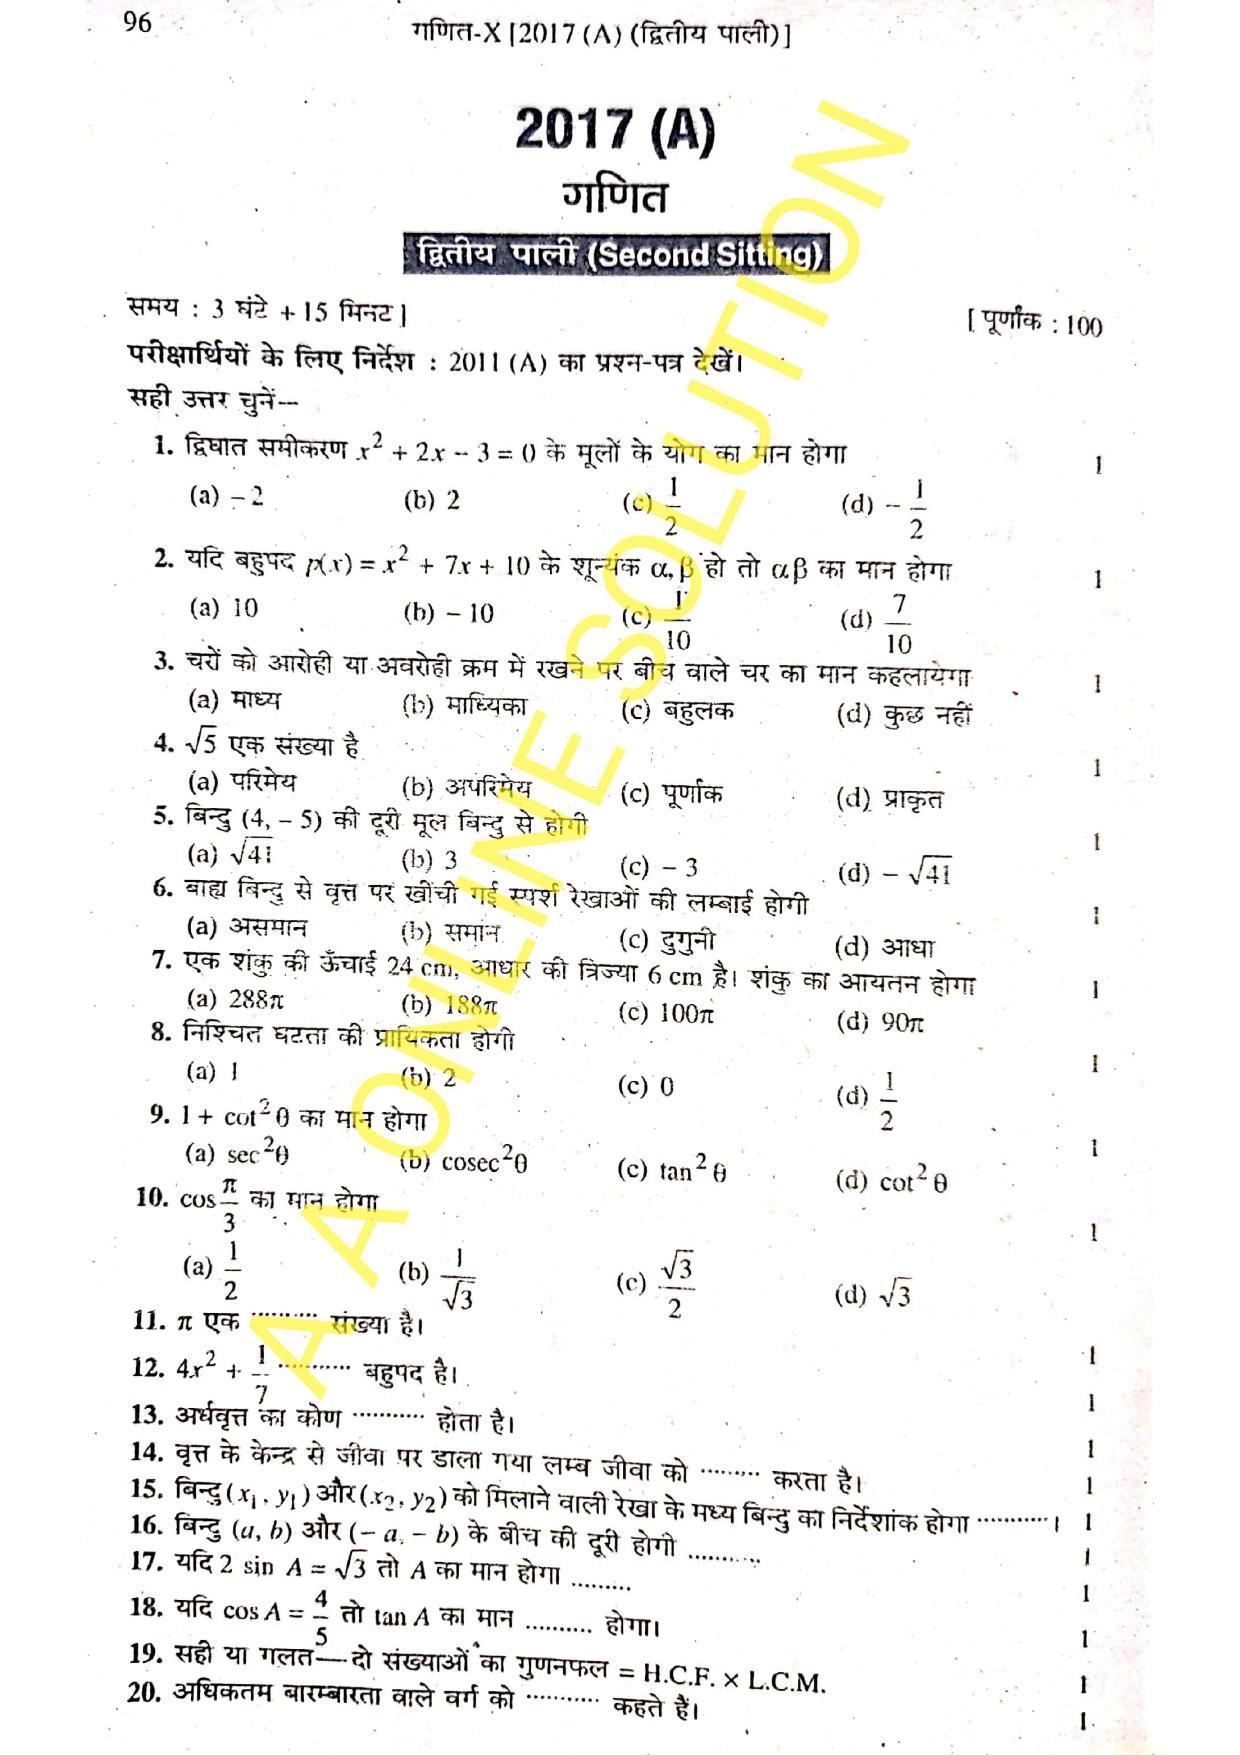 Bihar Board Class 10 Maths 2017 (2nd Sitting) Question Paper - Page 1